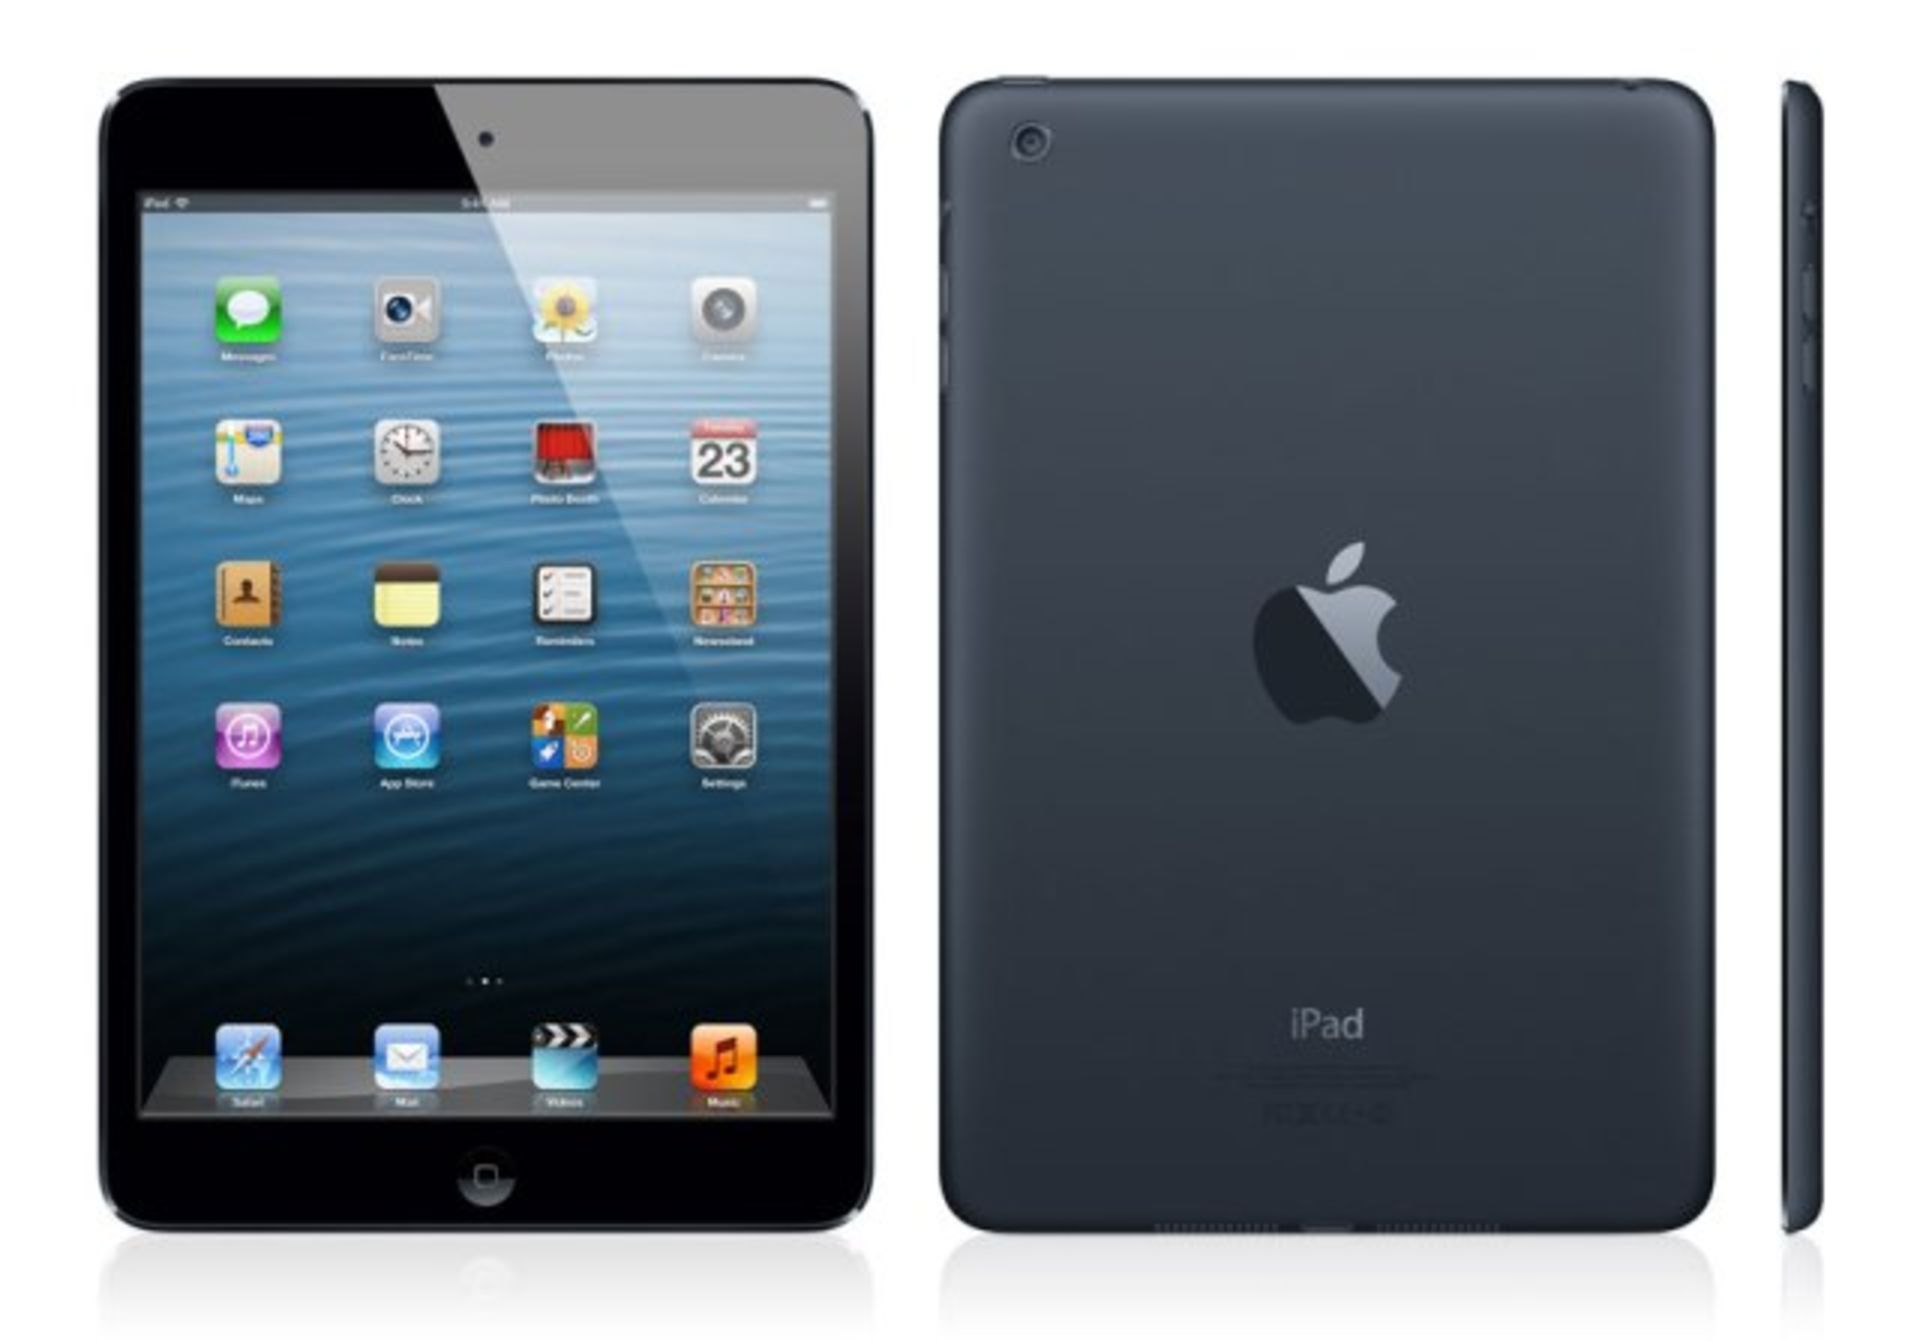 V Grade A Apple iPad Mini 16GB Black (With Matt Black Back) Front And Rear Facing Cameras And